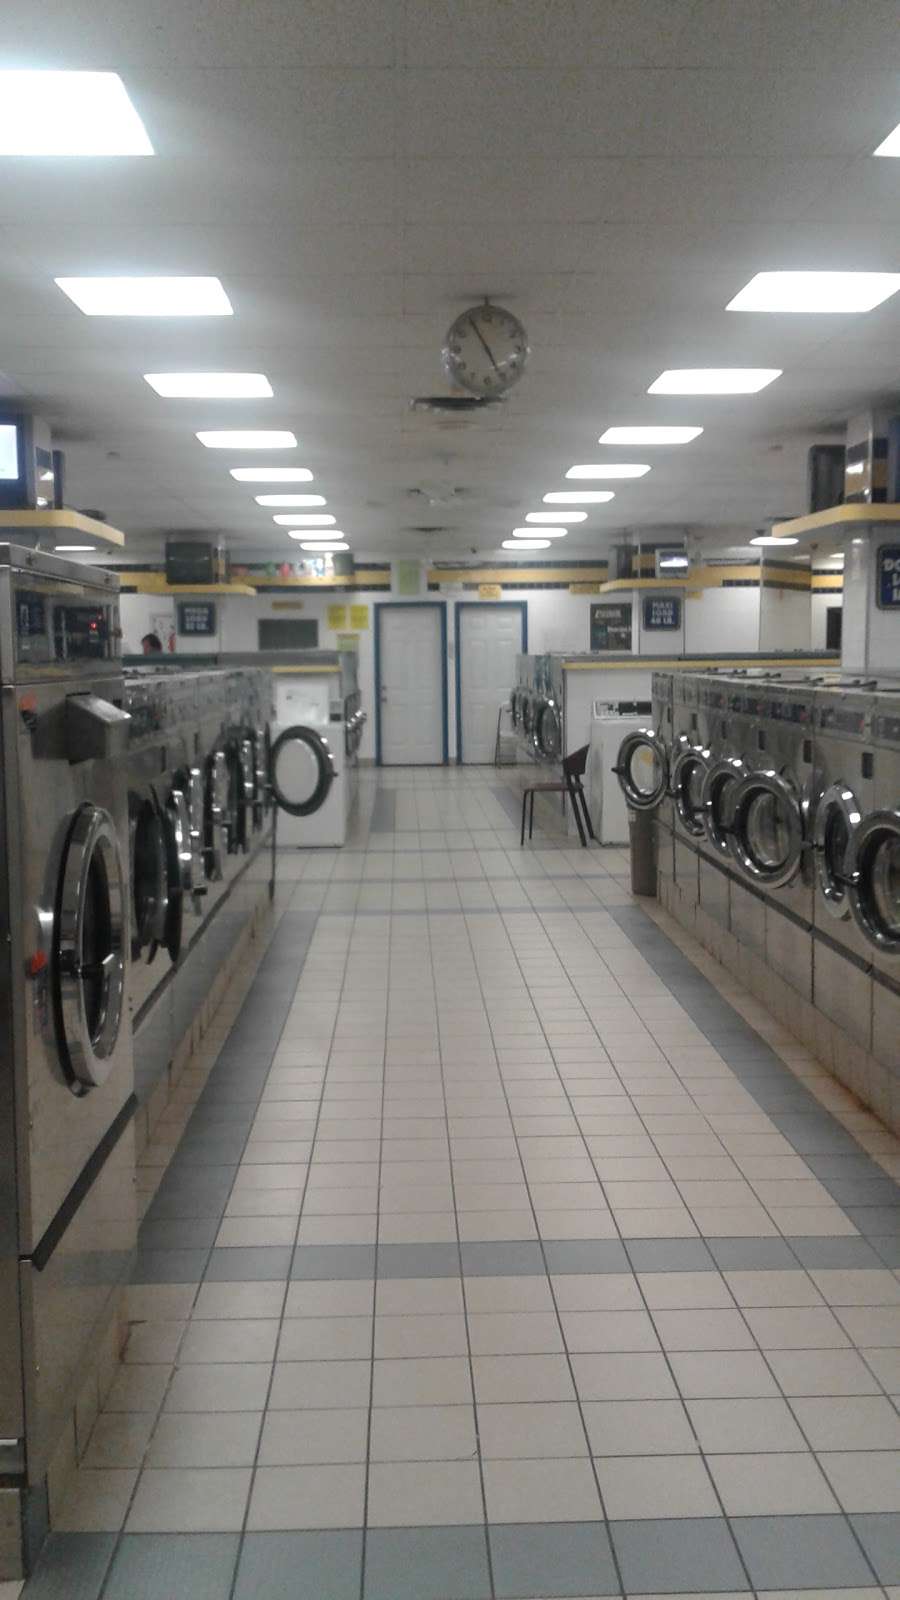 Laundry Magic 24 Hour Laundromat - laundry  | Photo 1 of 3 | Address: 1819 Grand Ave, Waukegan, IL 60085, USA